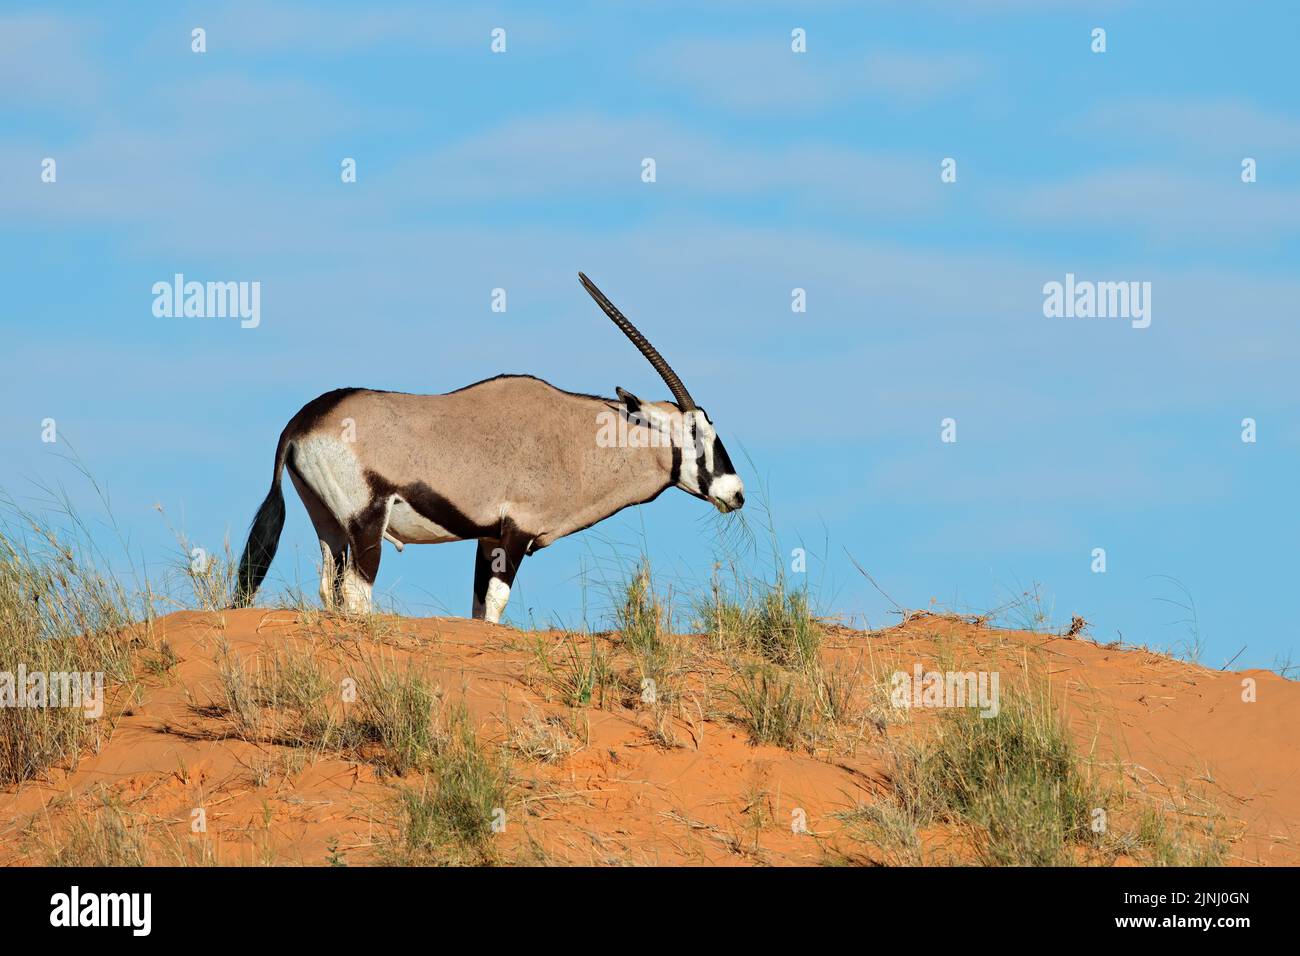 A gemsbok antelope (Oryx gazella) on a red sand dune, Kalahari desert, South Africa Stock Photo